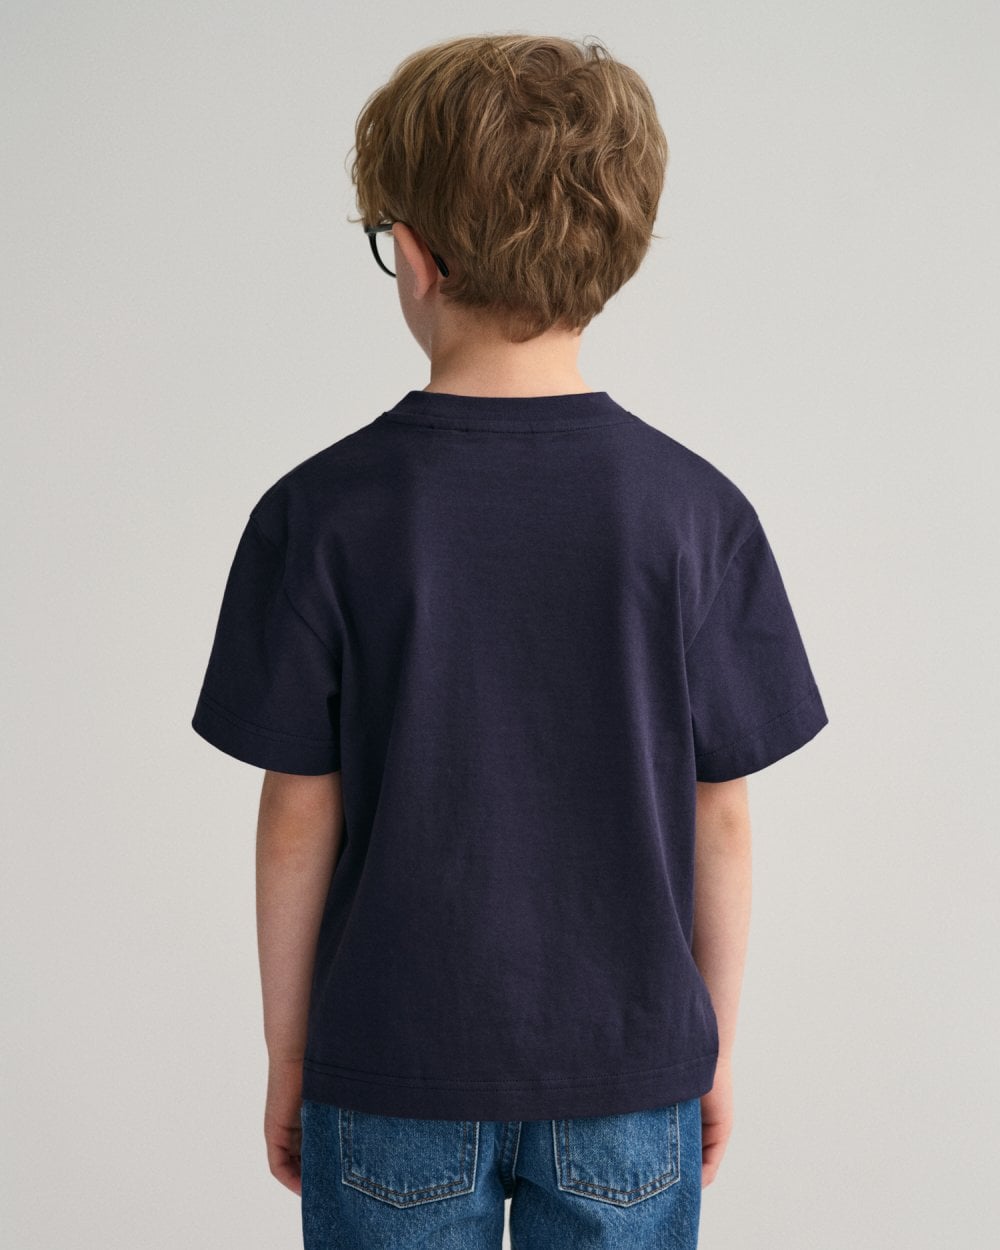 Kids Gant Usa T-Shirt